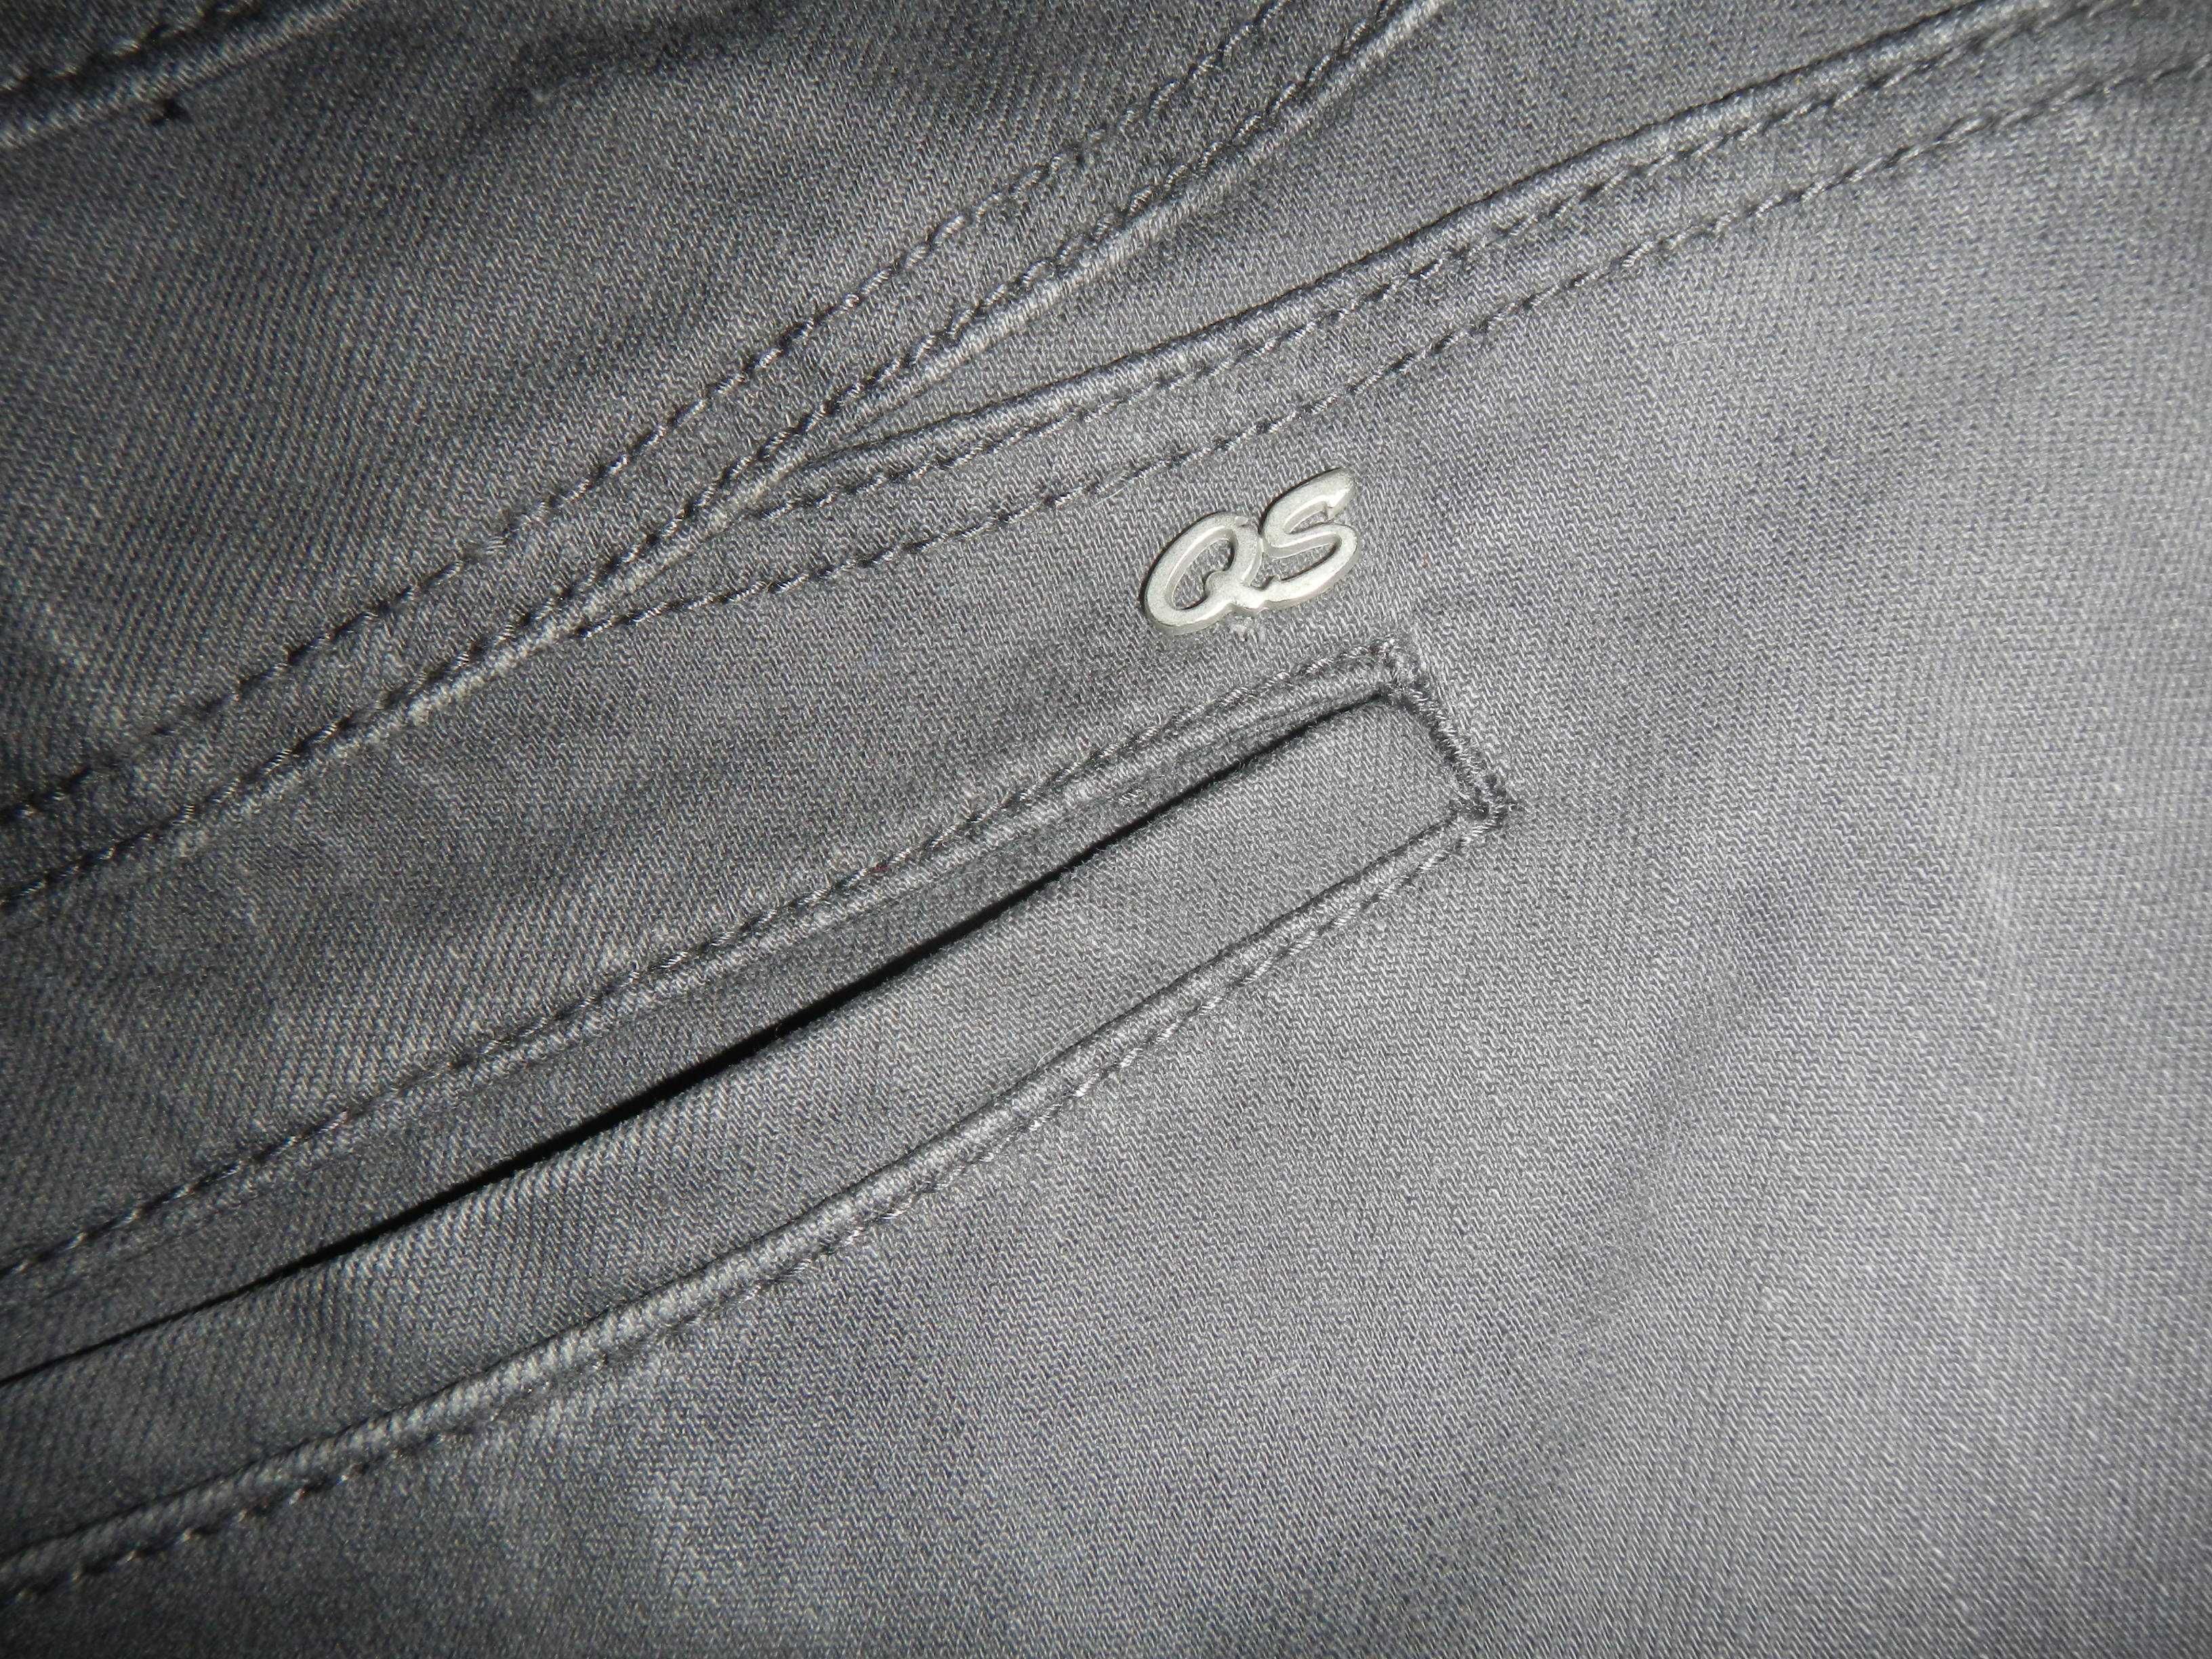 Spodniczka L mini khaki QS by s.Oliver